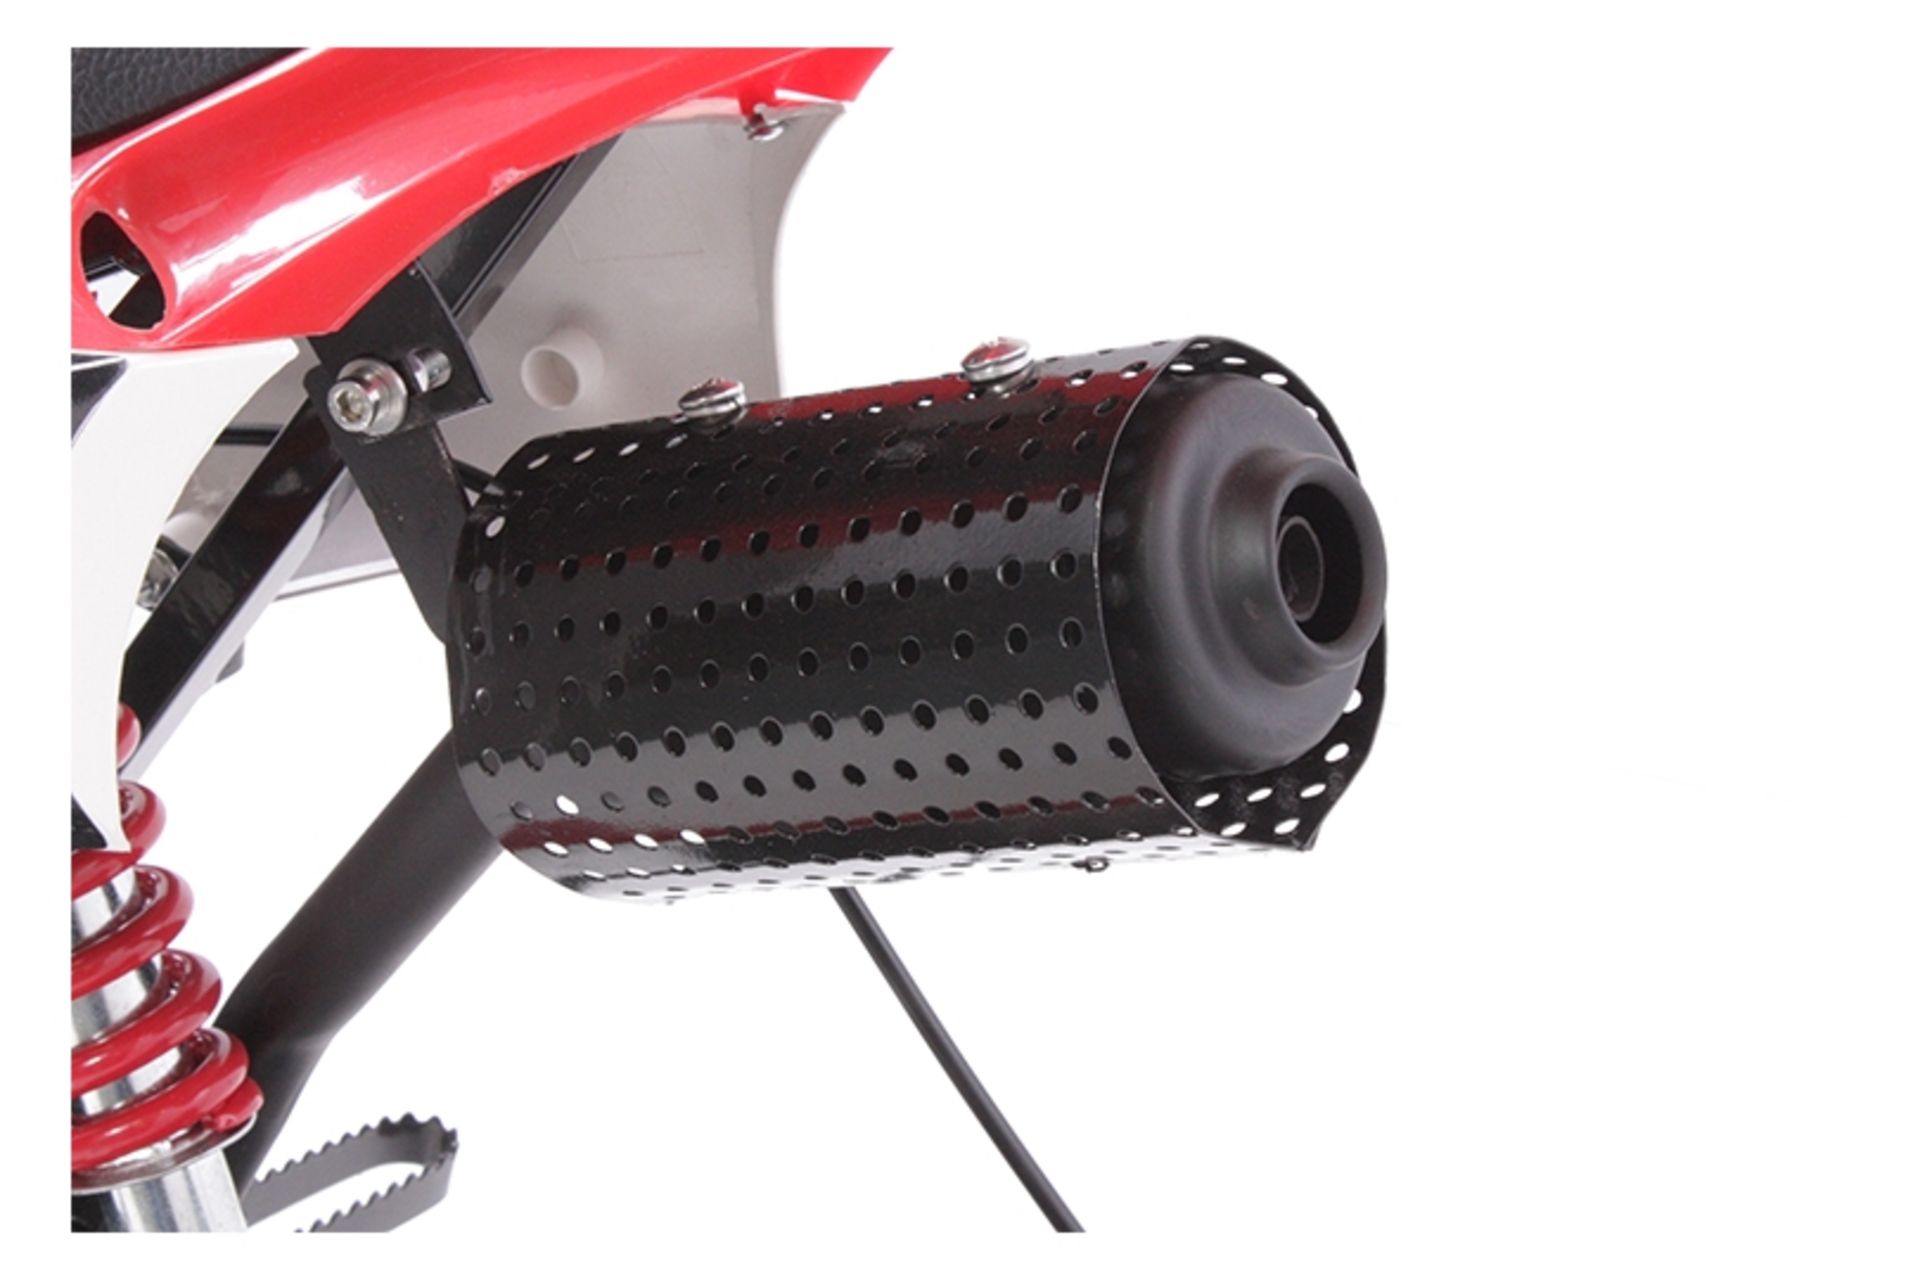 1 x Pocket Rocket Scrambler 49cc Mini Dirt Devil Motor Bike (Red). Brand new and Boxed! Very high - Image 2 of 4